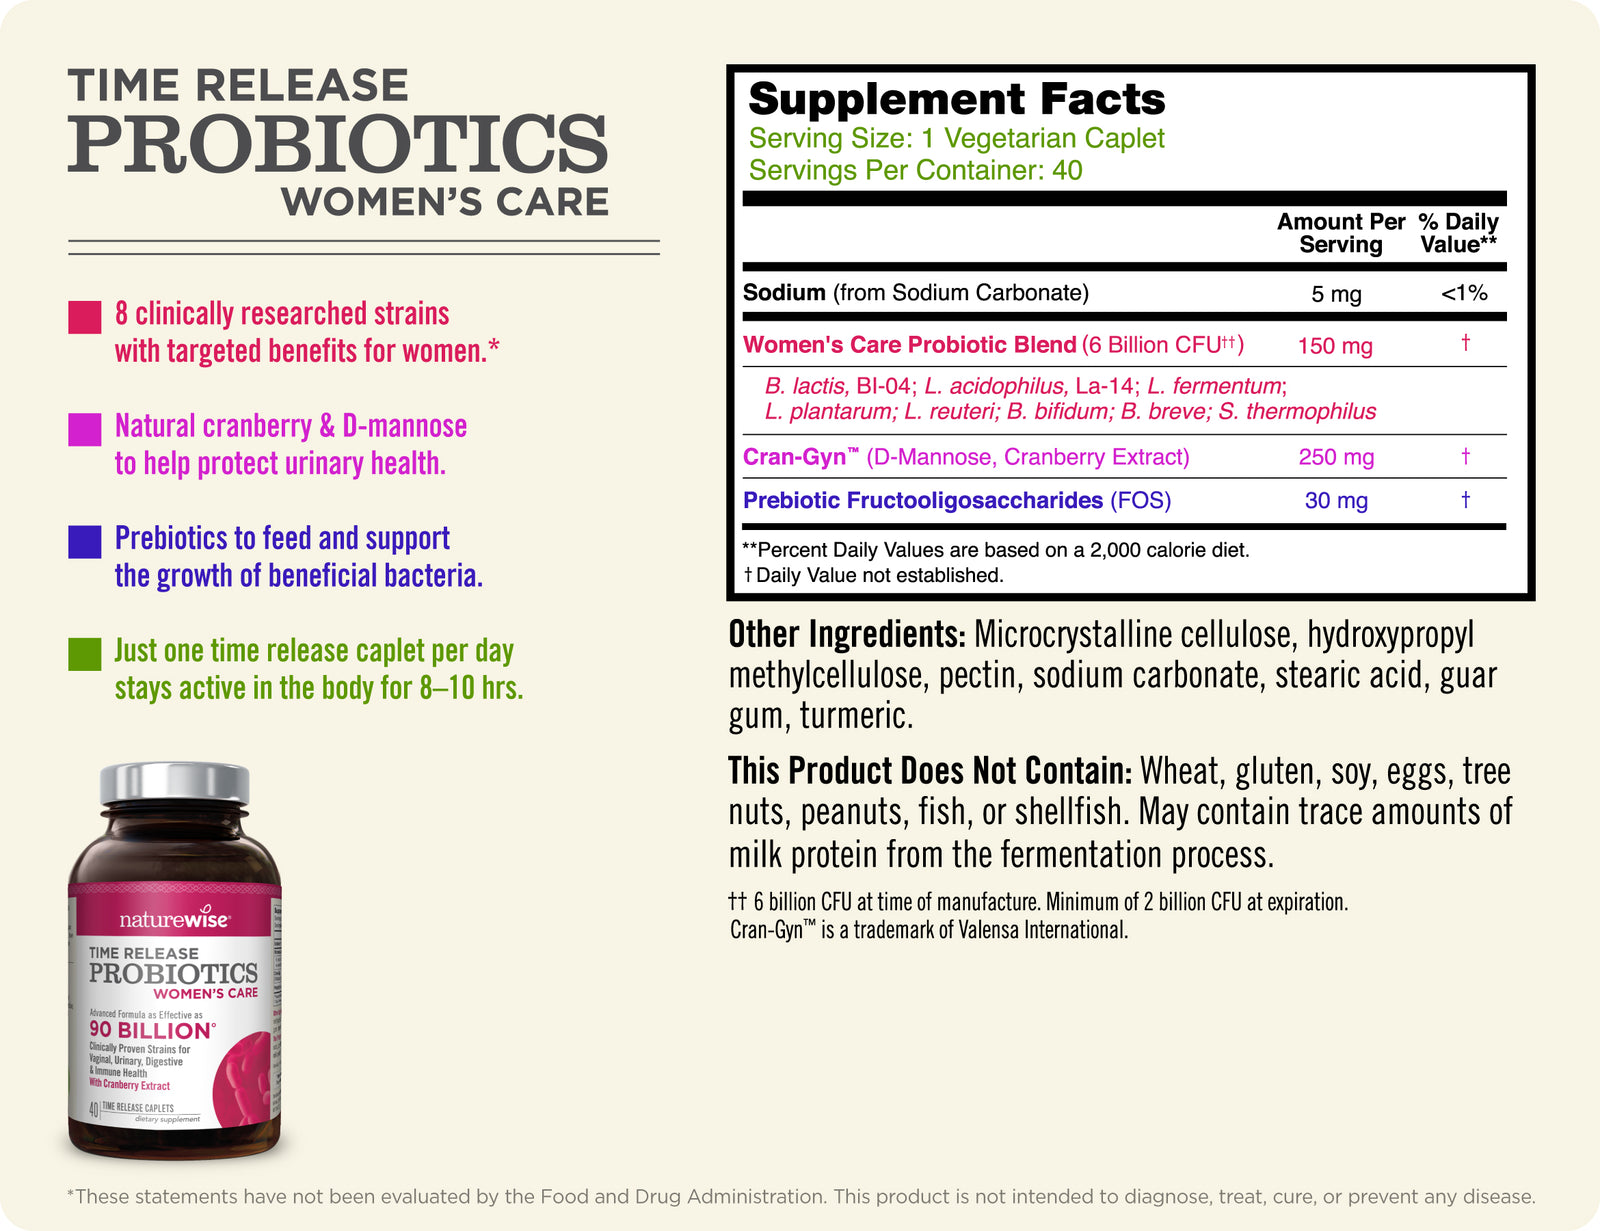 Women's Care Probiotics Sup Facts 